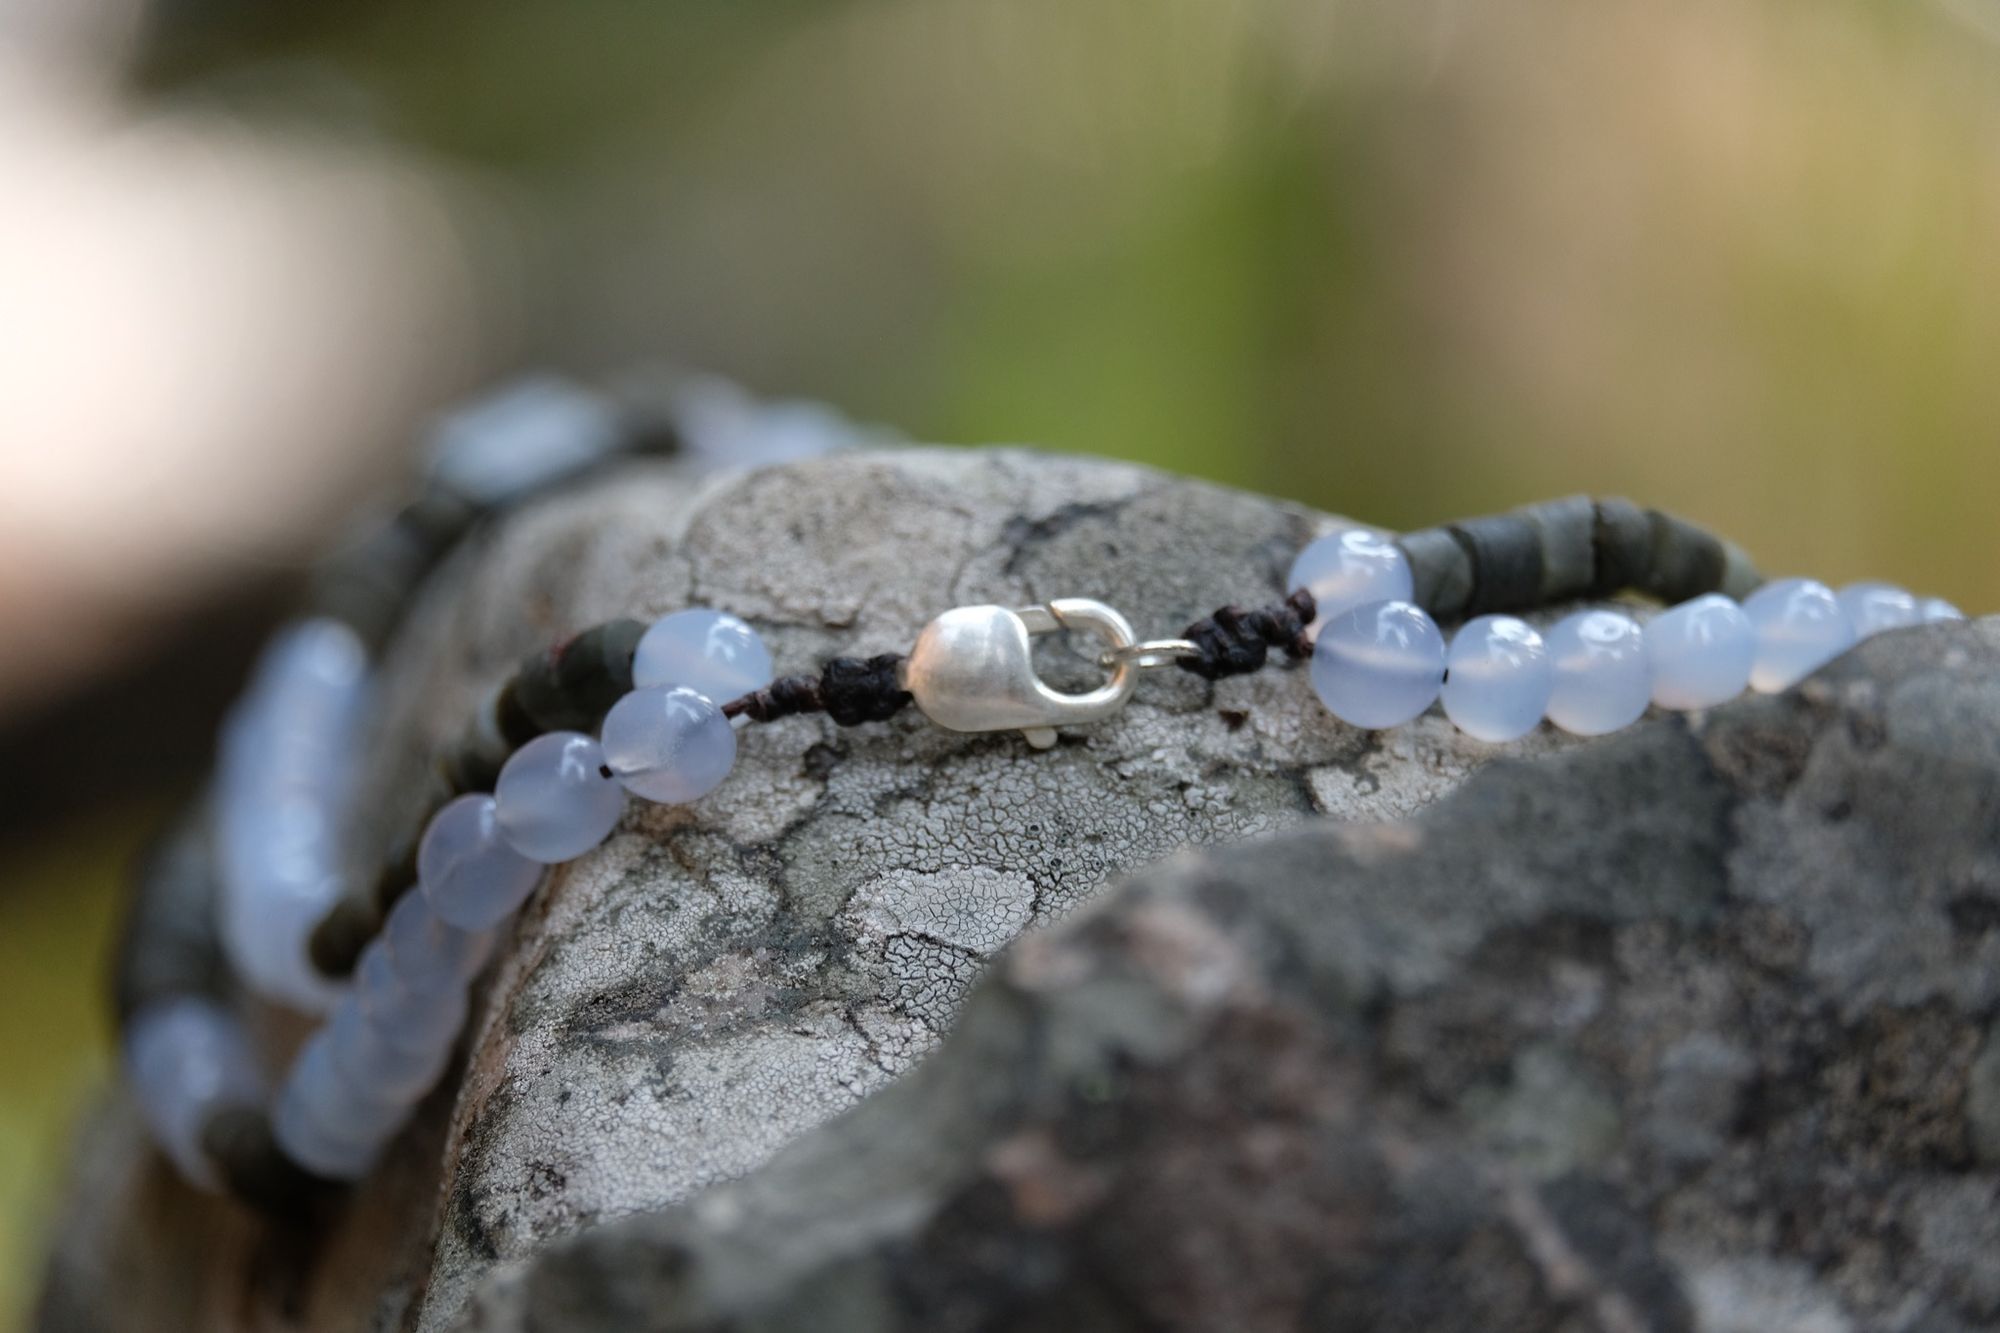 detail of two strand necklace with Smoky quartz, quartz, luminous blue carnelian, labradorite and black tourmaline sitting on a boulder